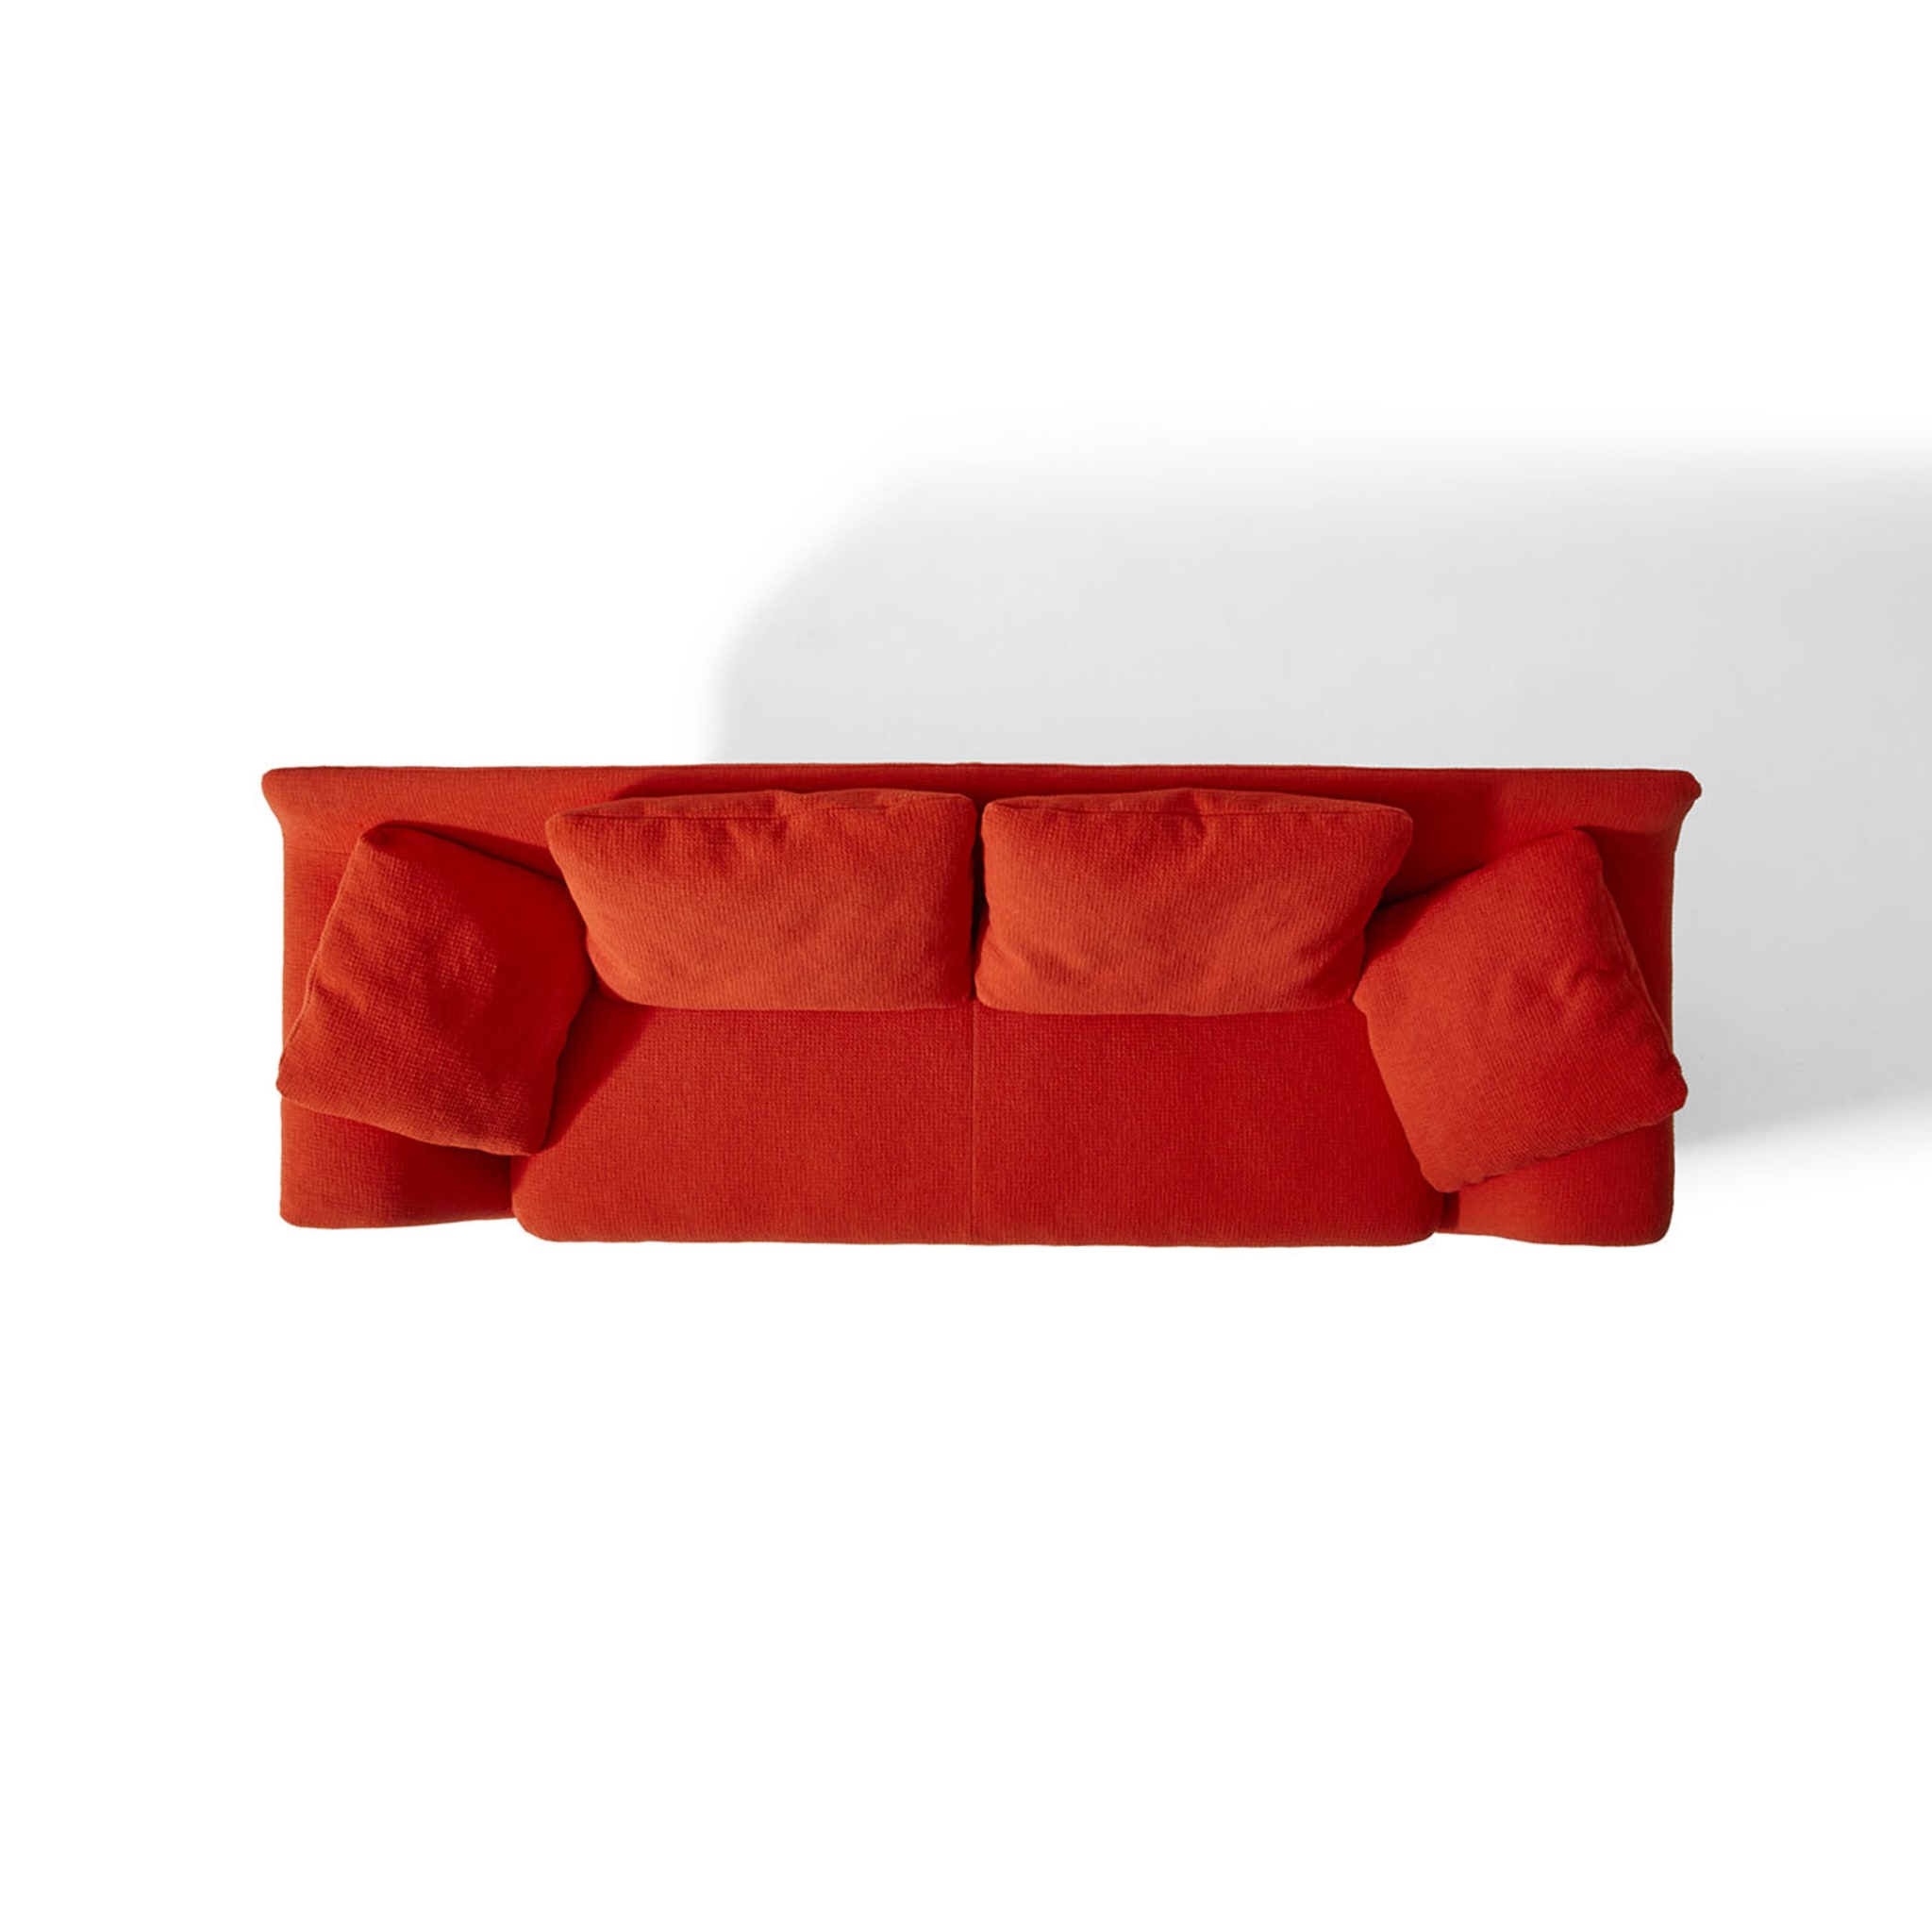 Esosoft 3-Seater Orange Sofa by Antonio Citterio - Alternative view 1